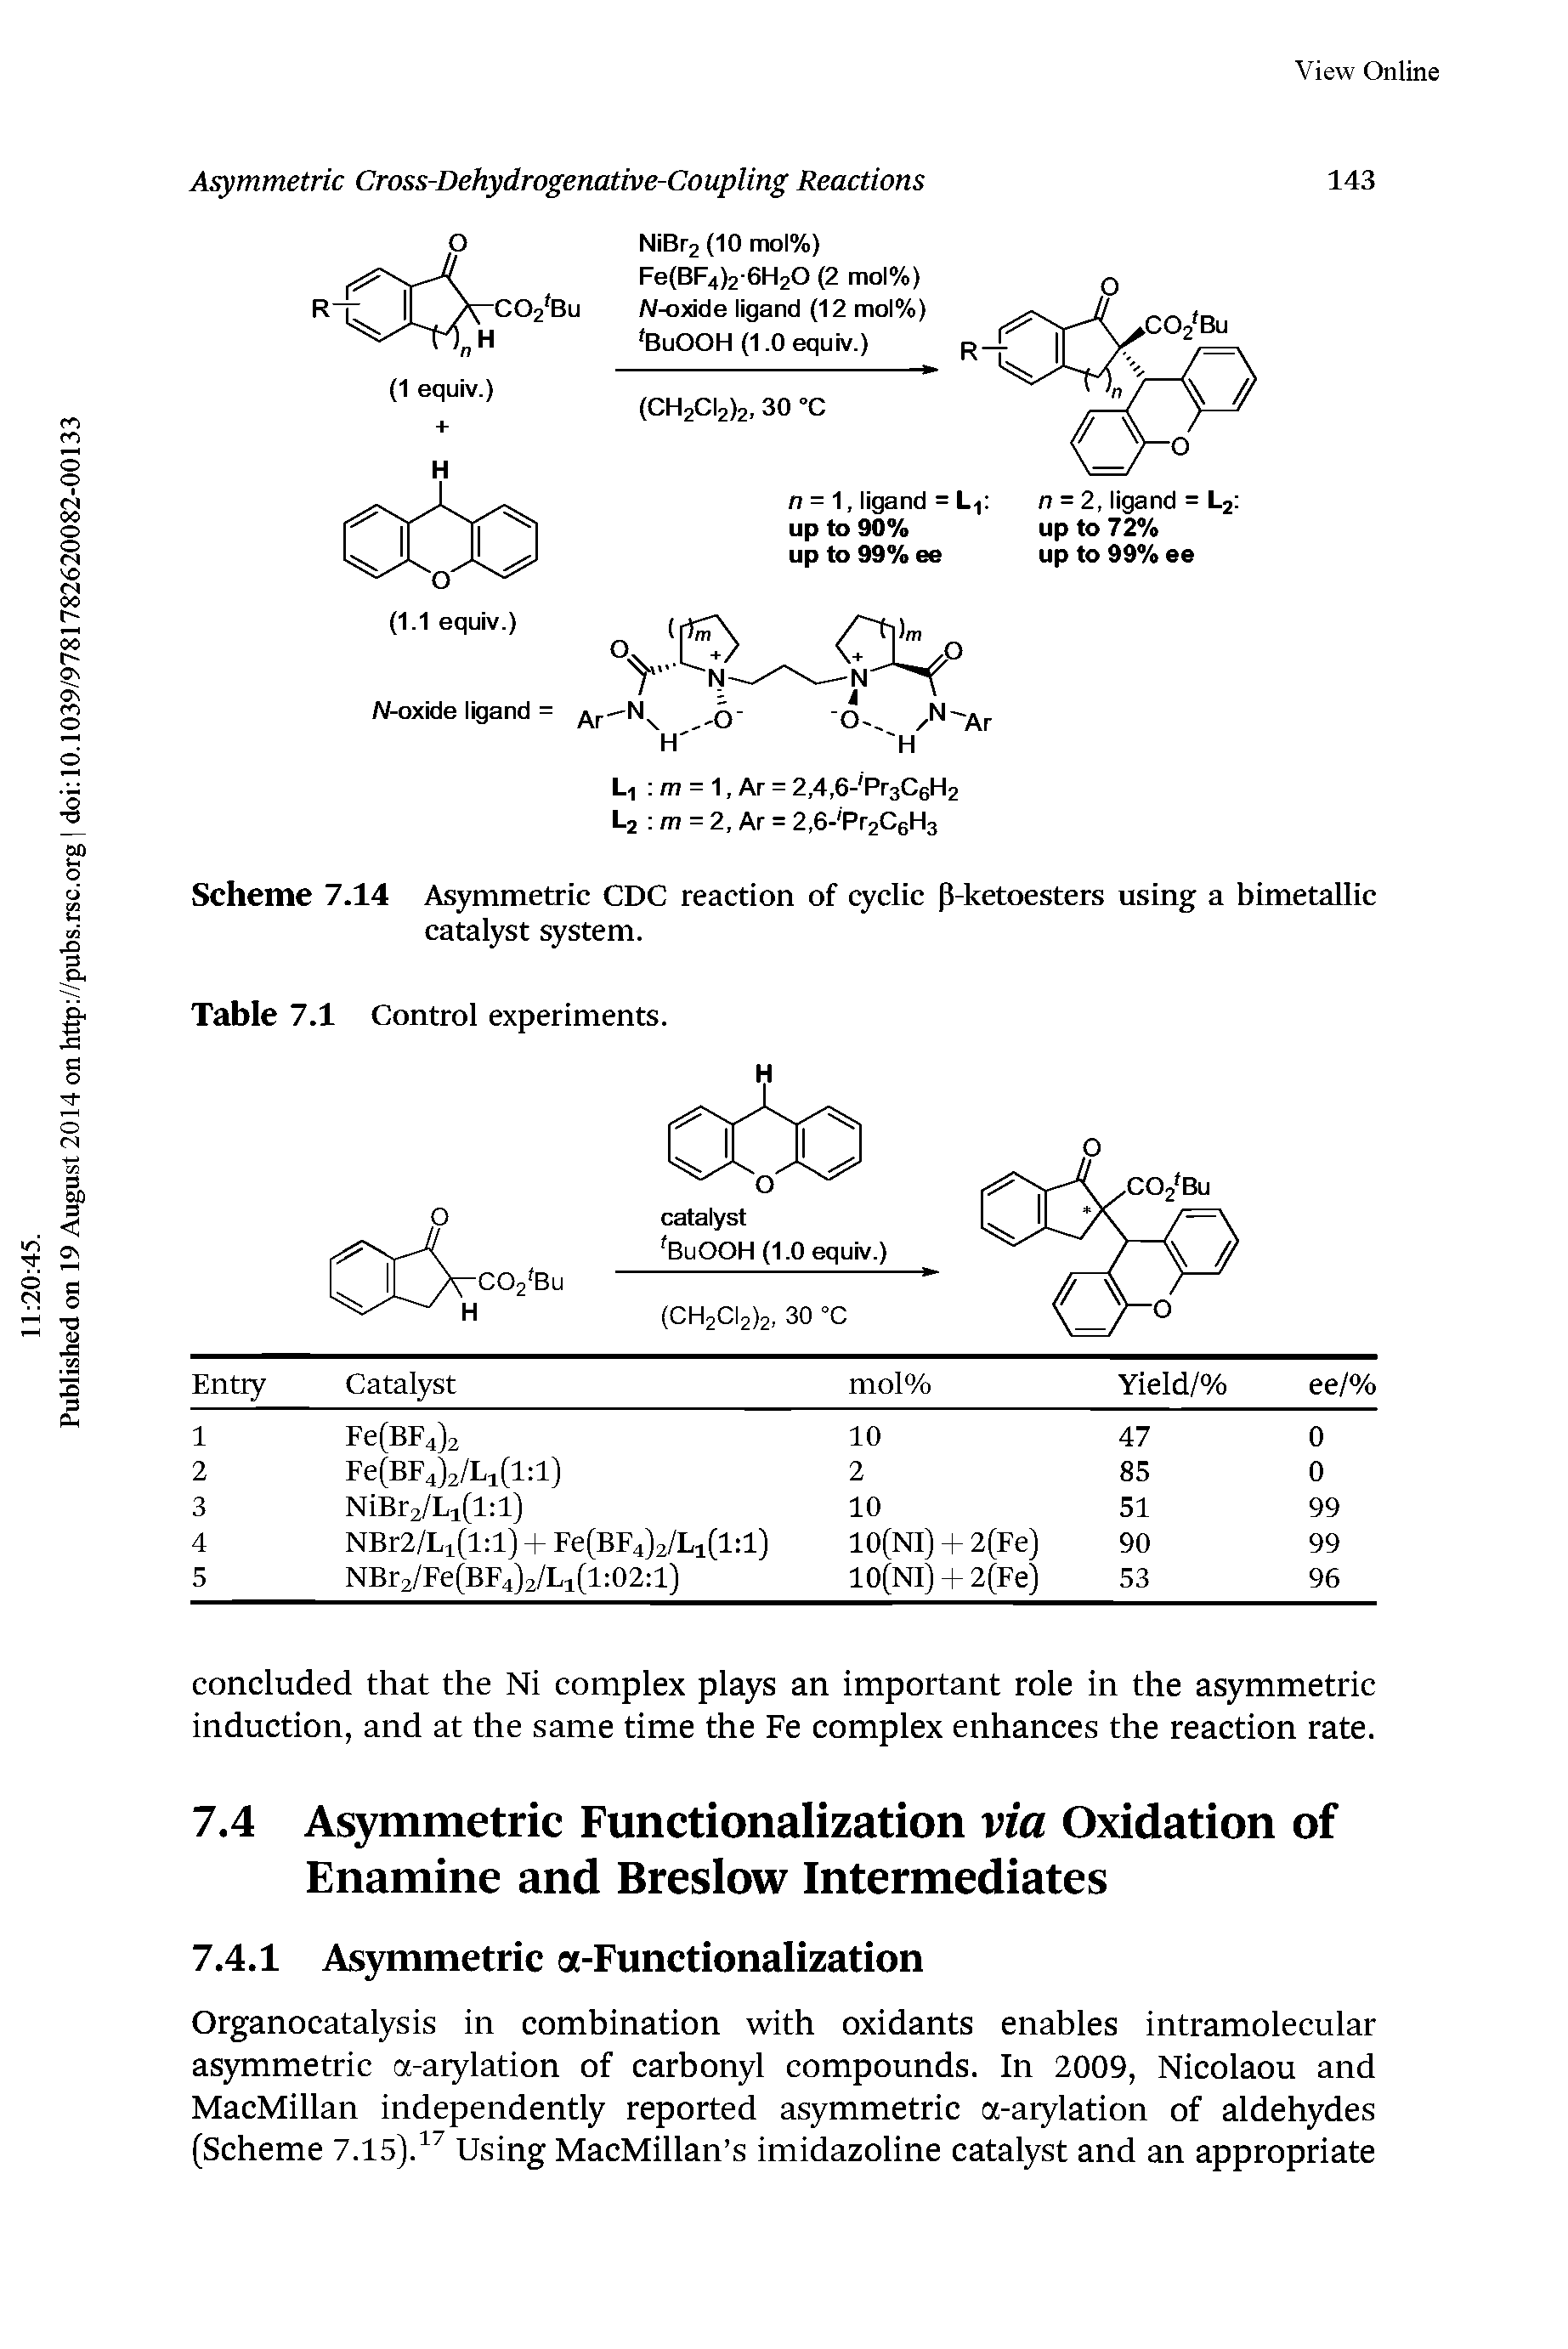 Scheme 7.14 Asymmetric CDC reaction of cyclic p-ketoesters using a bimetallic catalyst system.